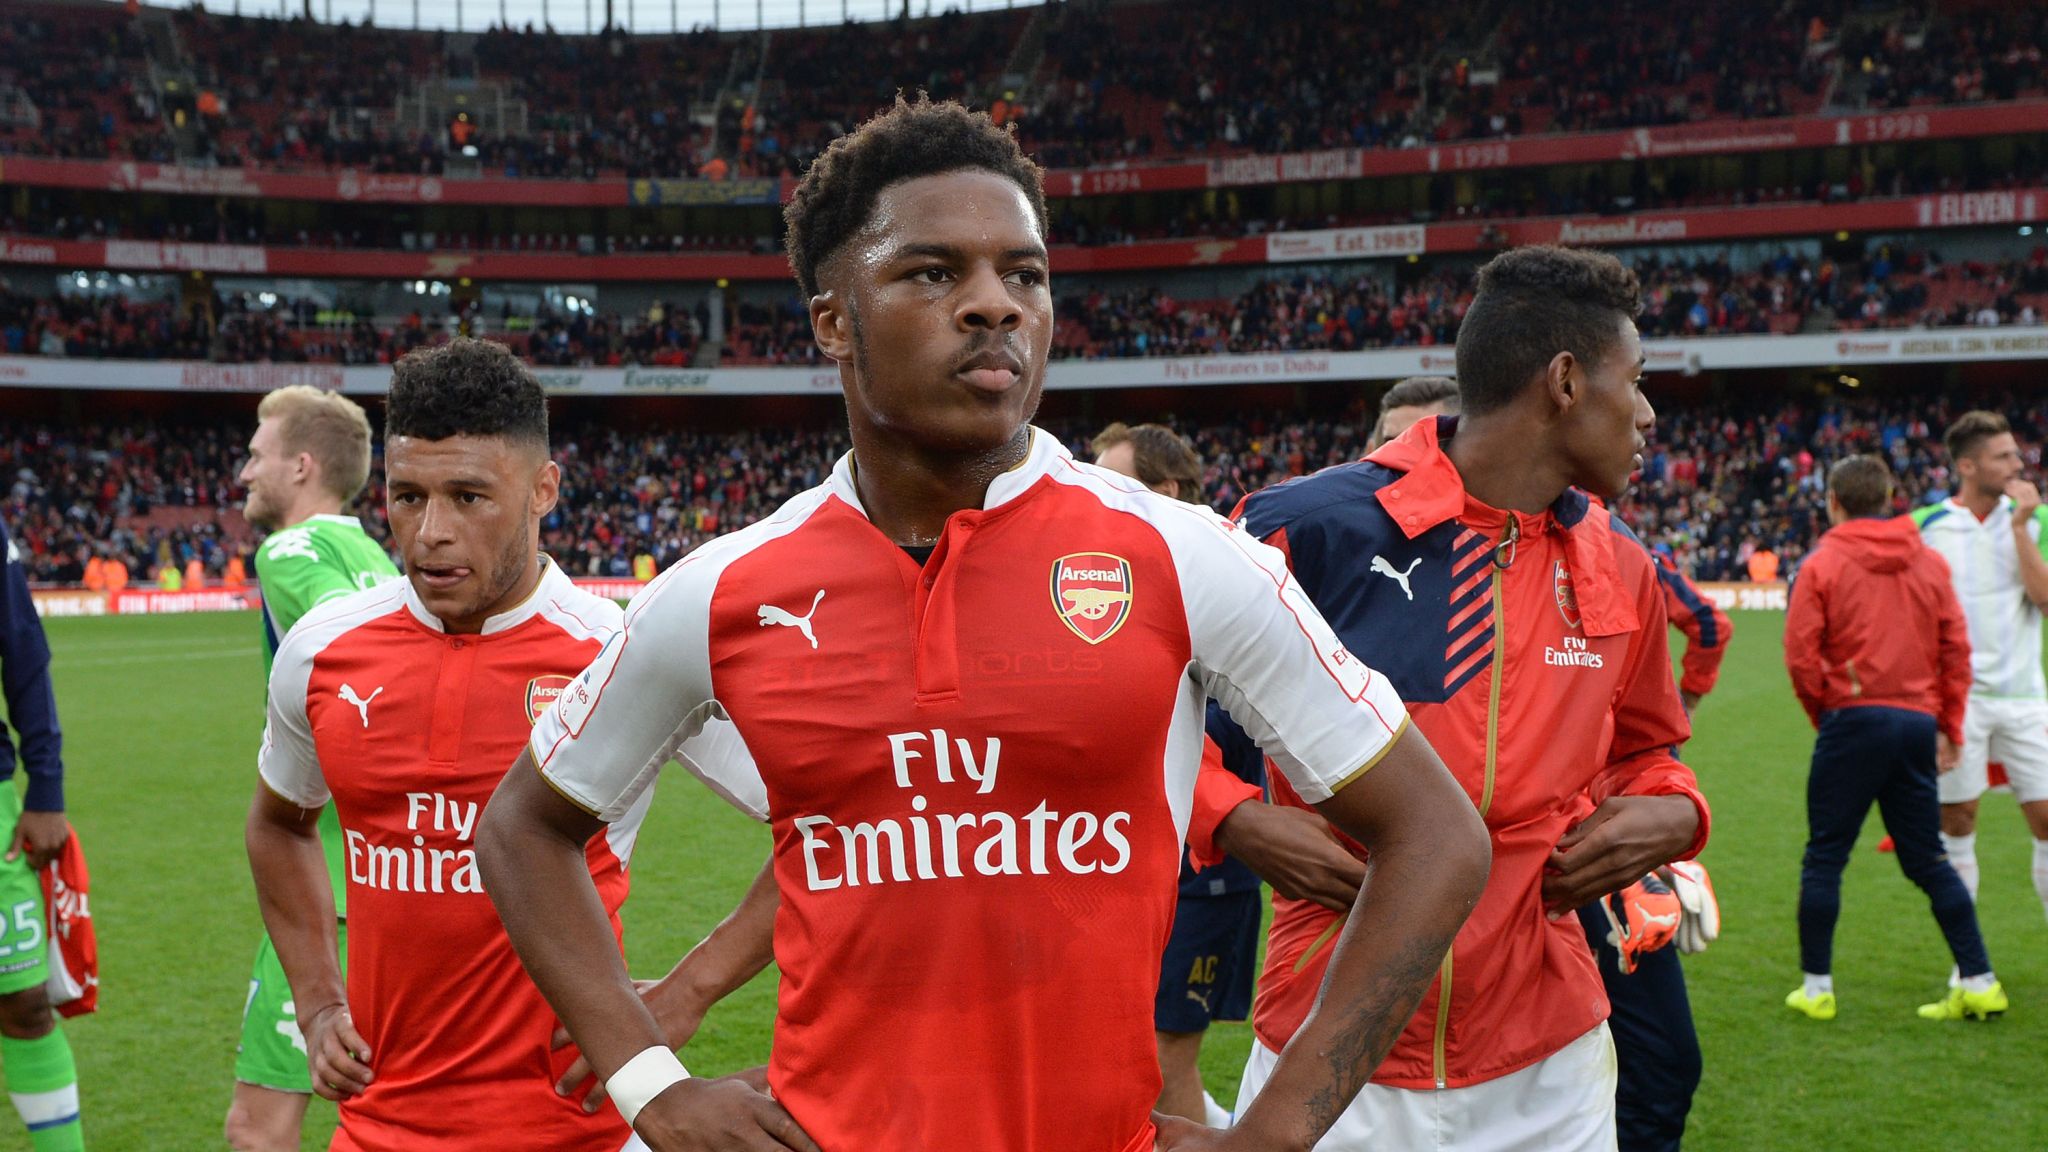 Arsenal's Chuba Akpom hoping to break into first team | Football News | Sky  Sports